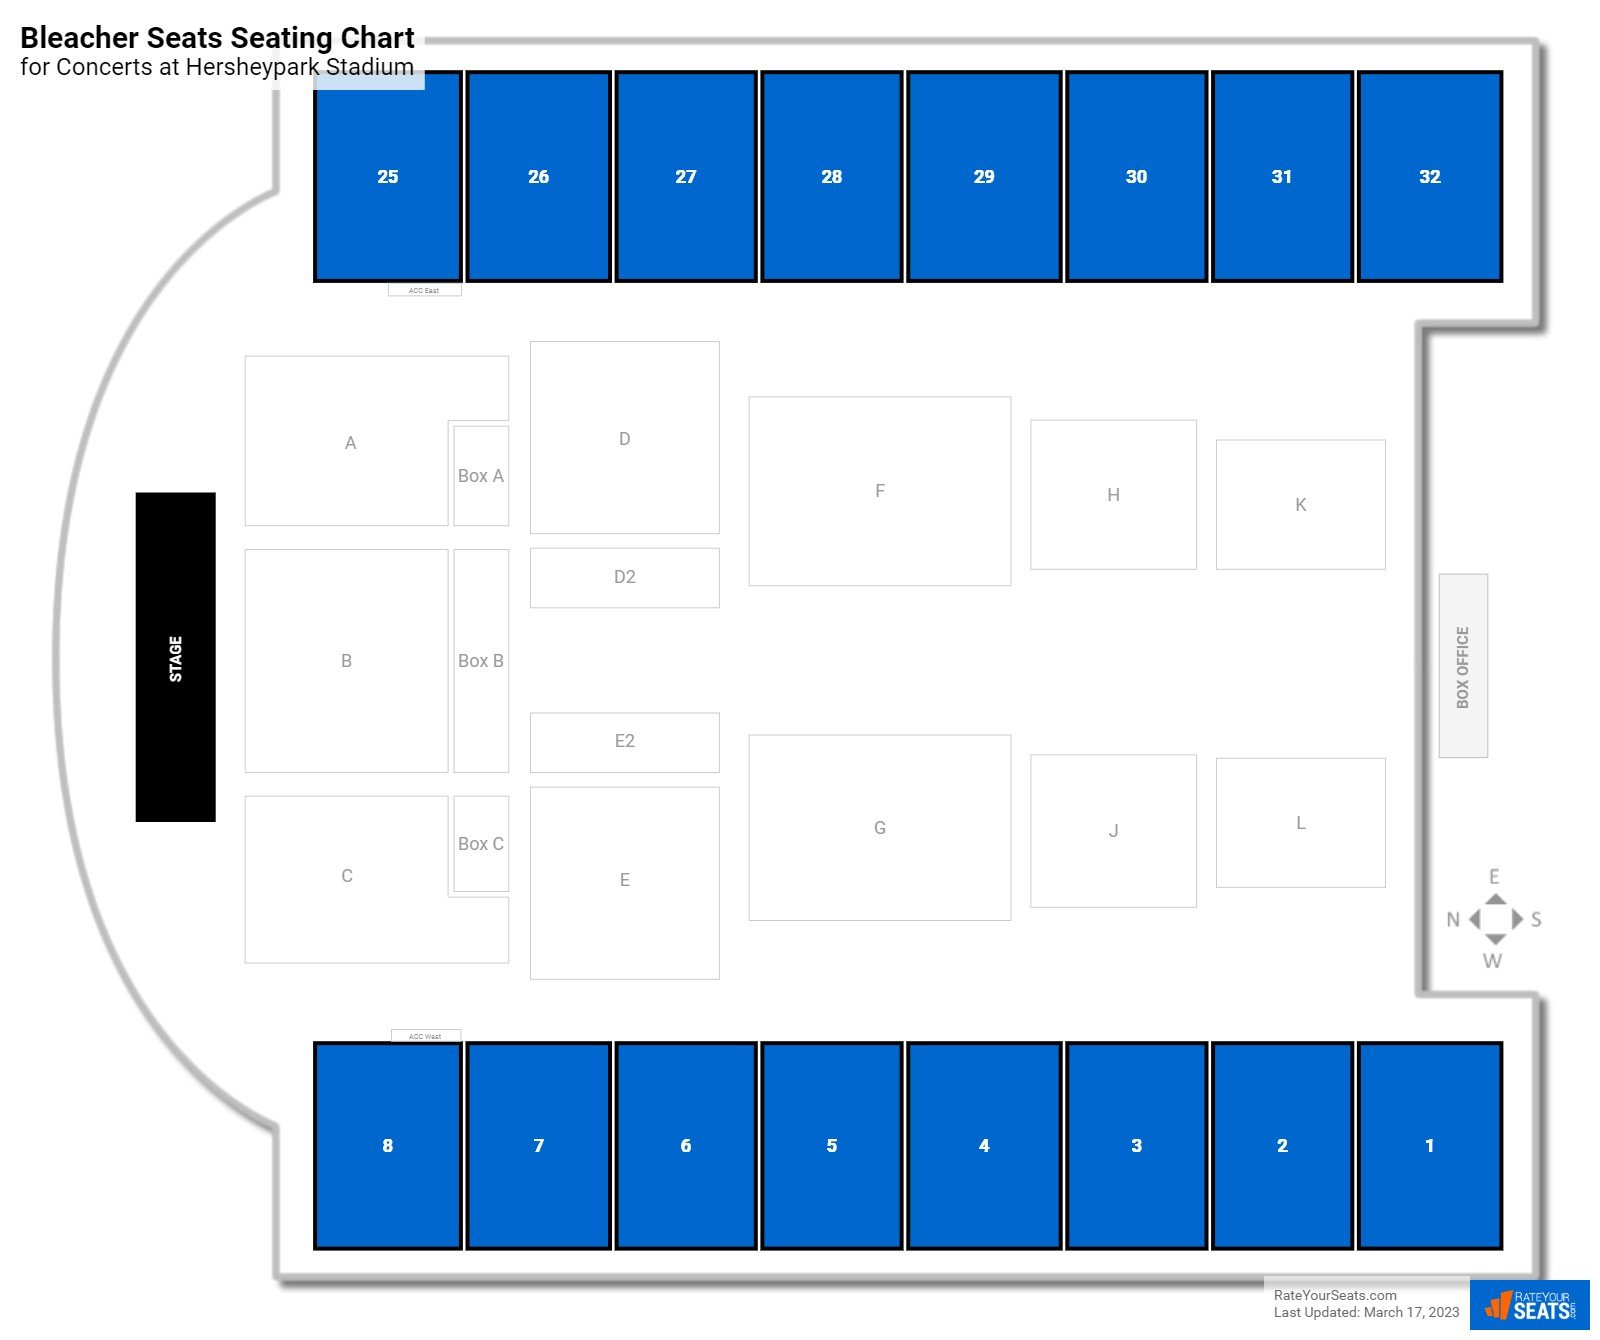 Concert Bleacher Seats Seating Chart at Hersheypark Stadium